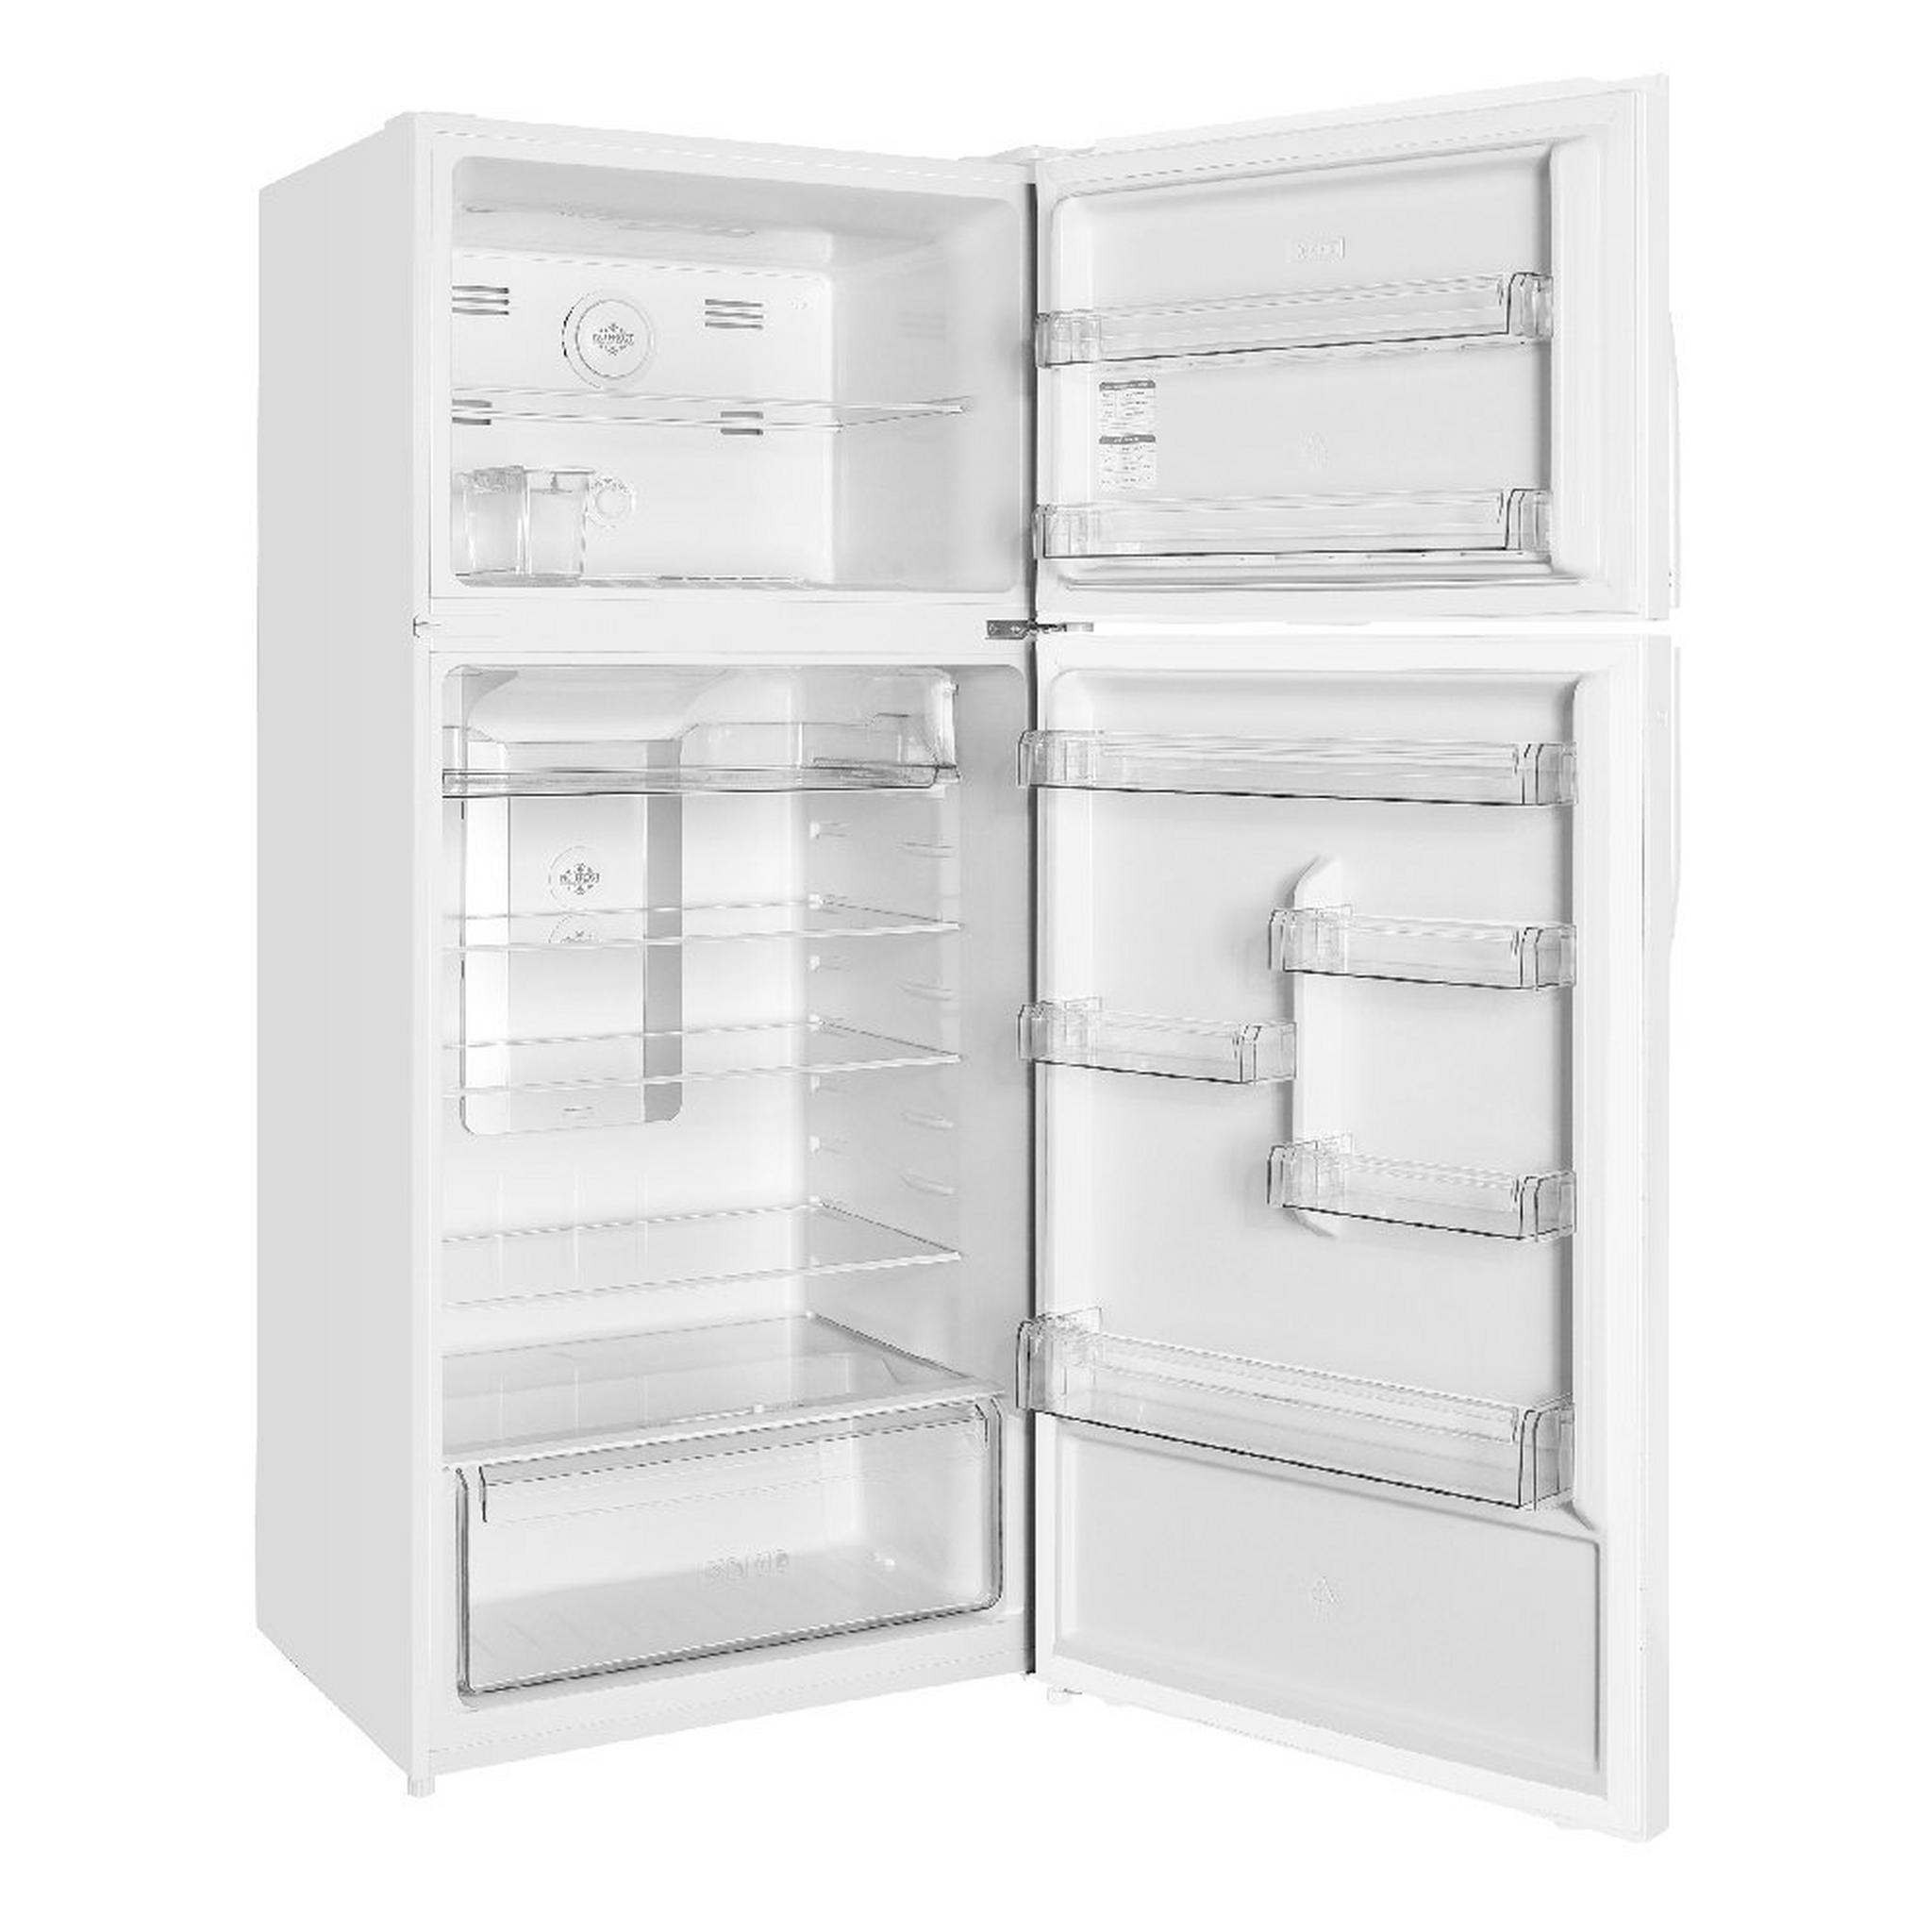 Wansa Top Mount Refrigerator, 20CFT, 571-Liters, WRTG-571-NFWTC82 - White